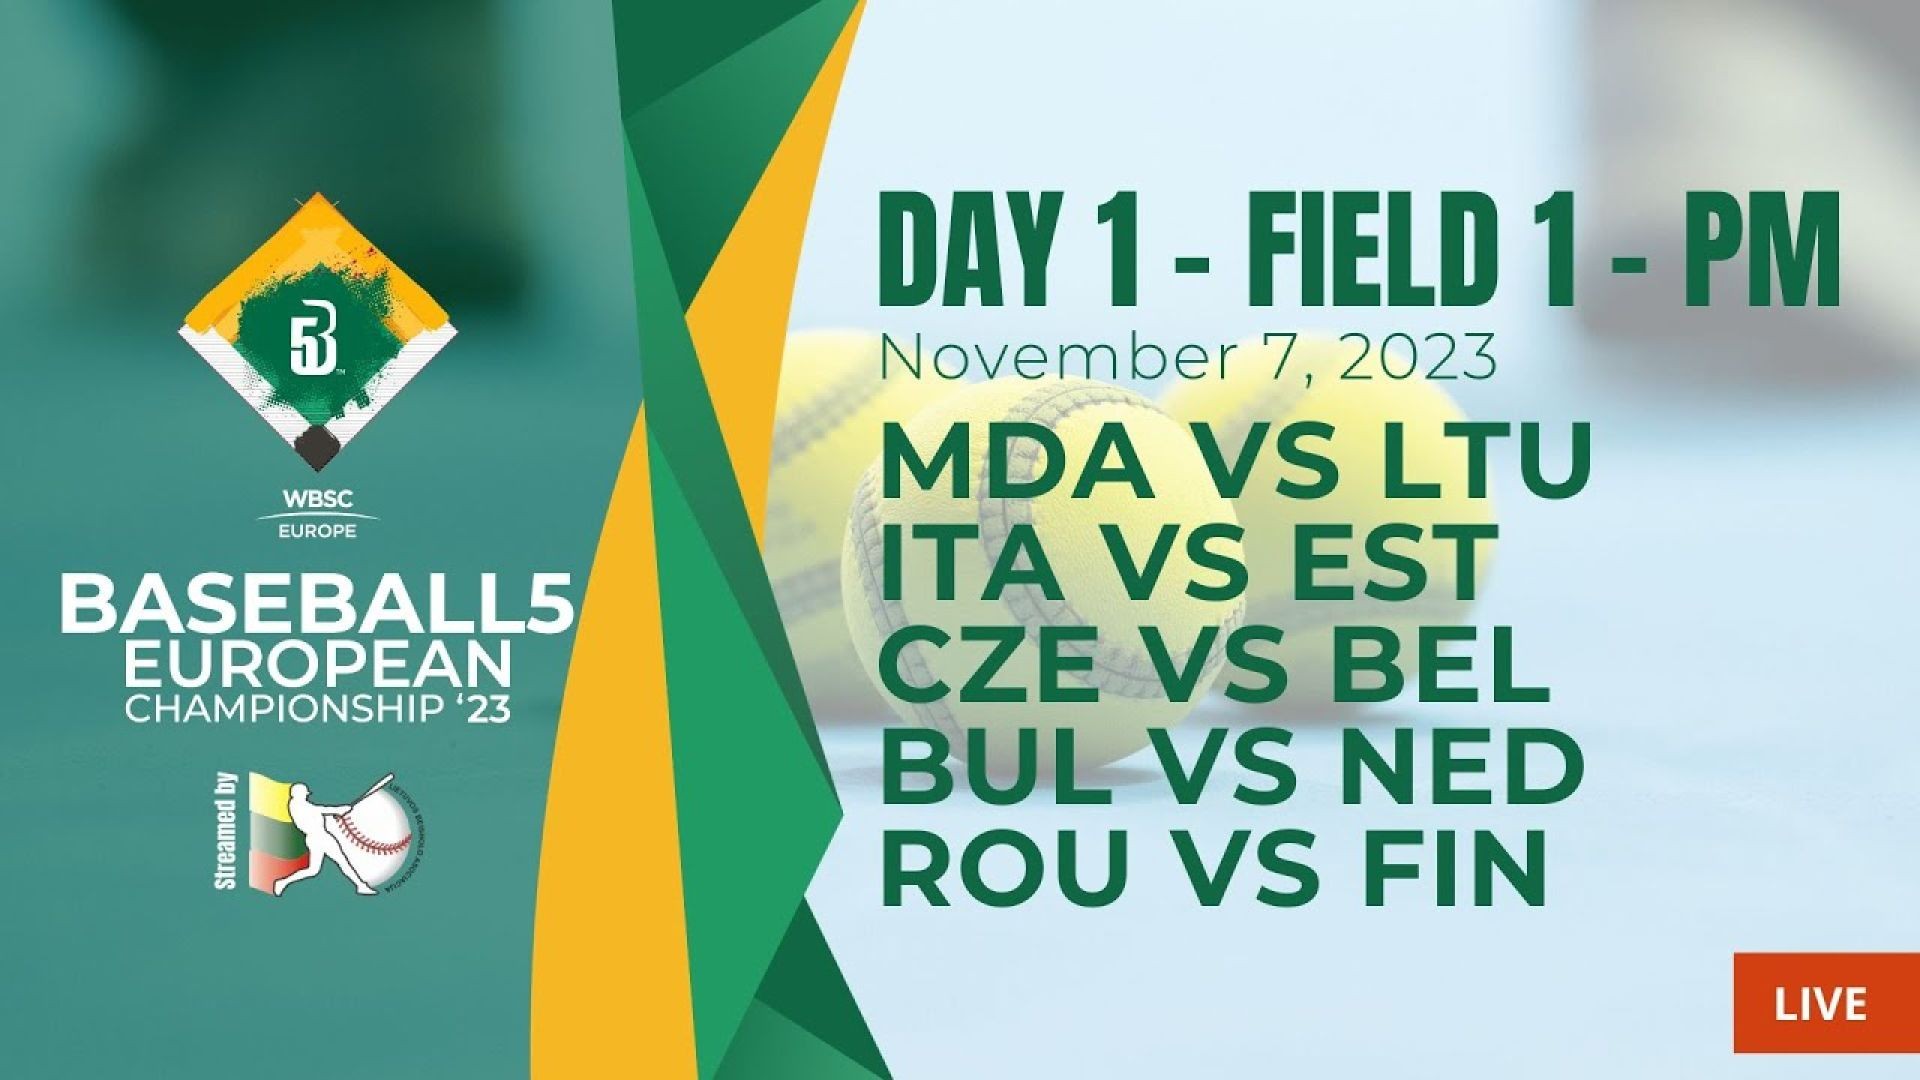 Field 1 - Day 1: Baseball5 European Championship 2023